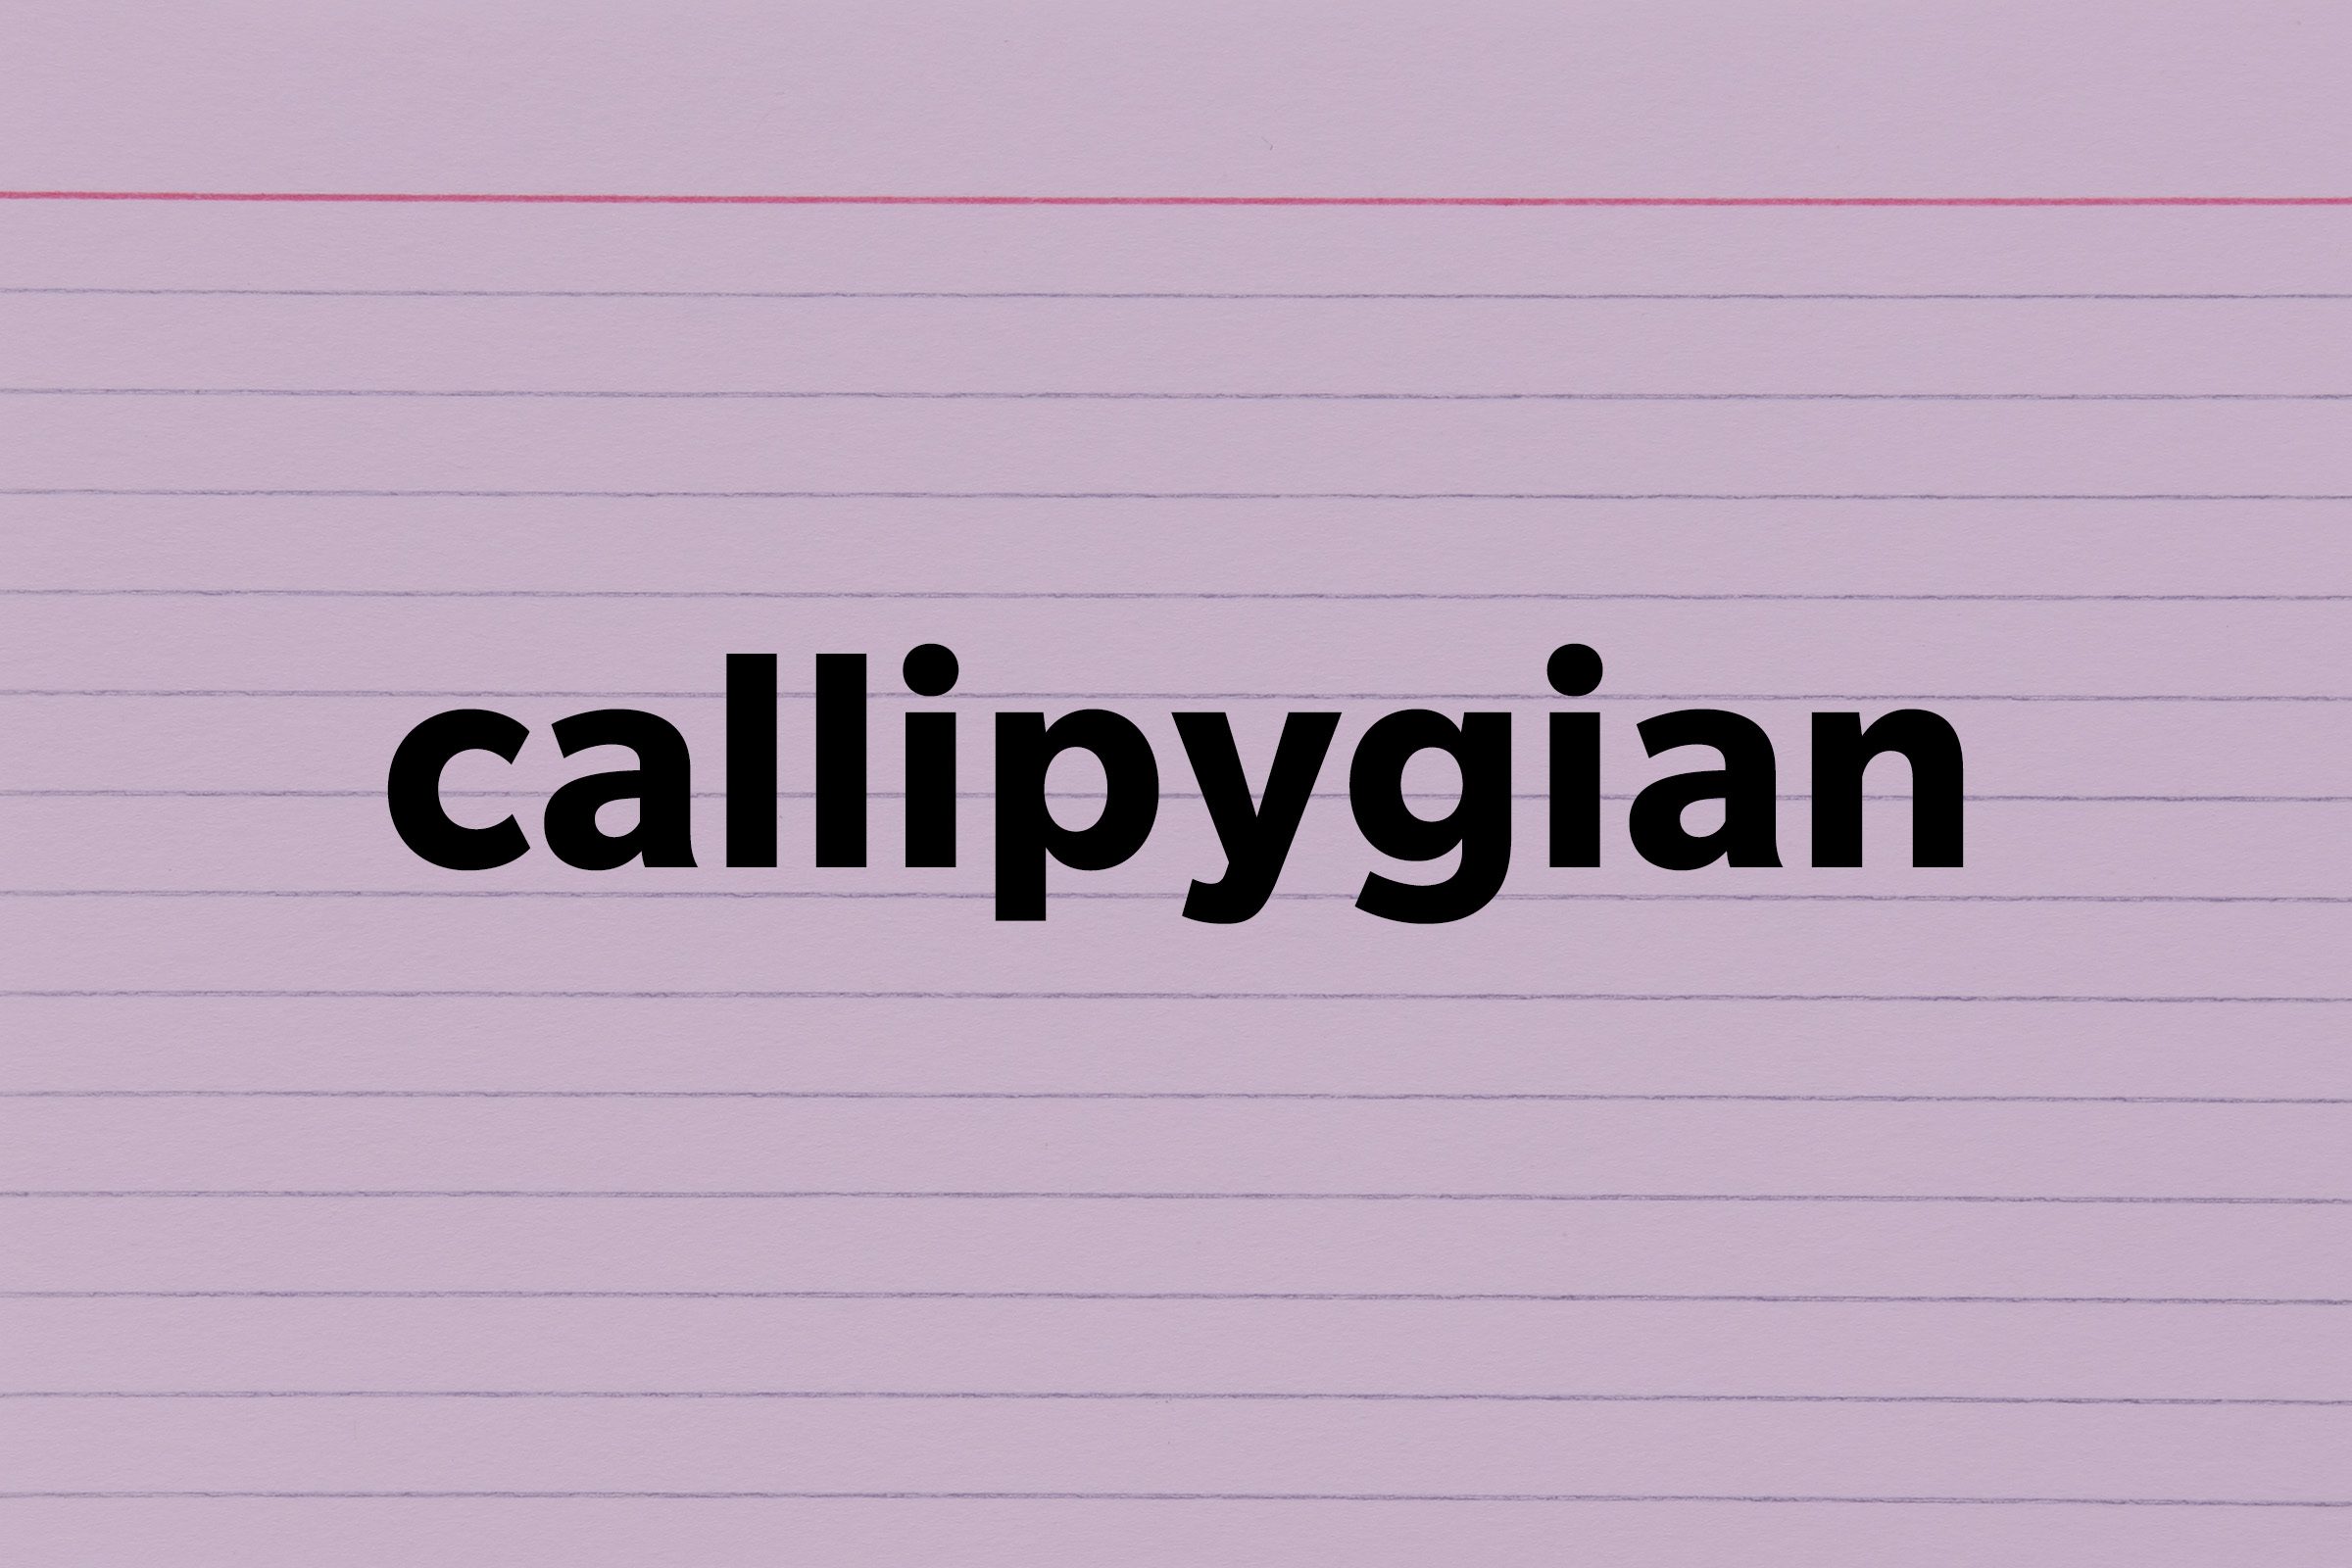 callipygous definition  callipygous meaning - words to describe